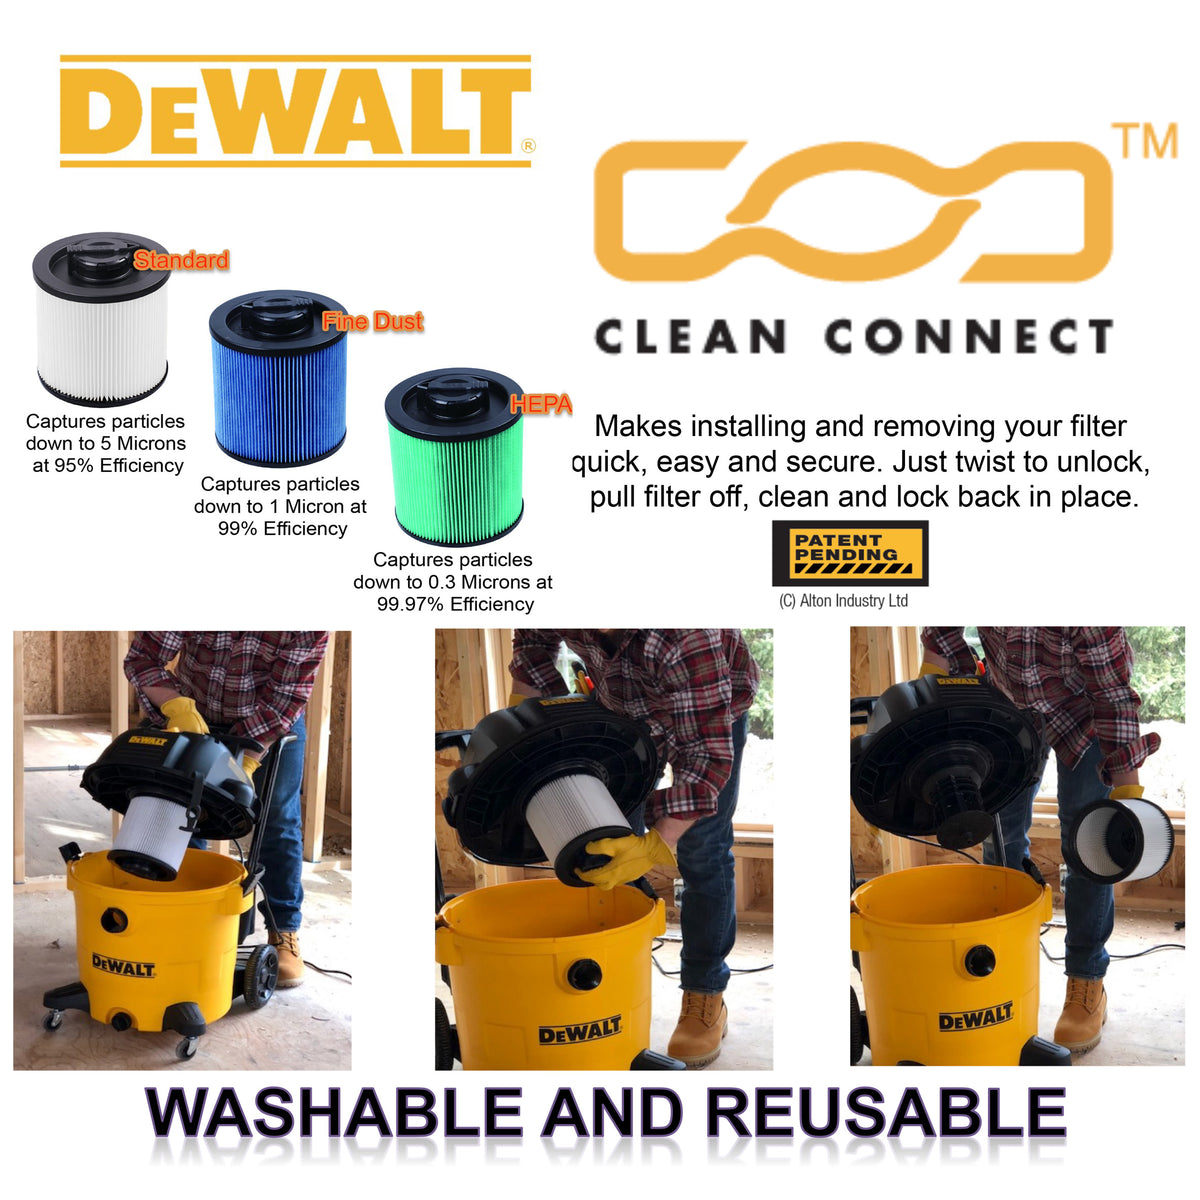 DXVC6910  DeWalt Standard Cartridge Filter for 6-16 Gallon DeWalt Wet/Dry Vacuums